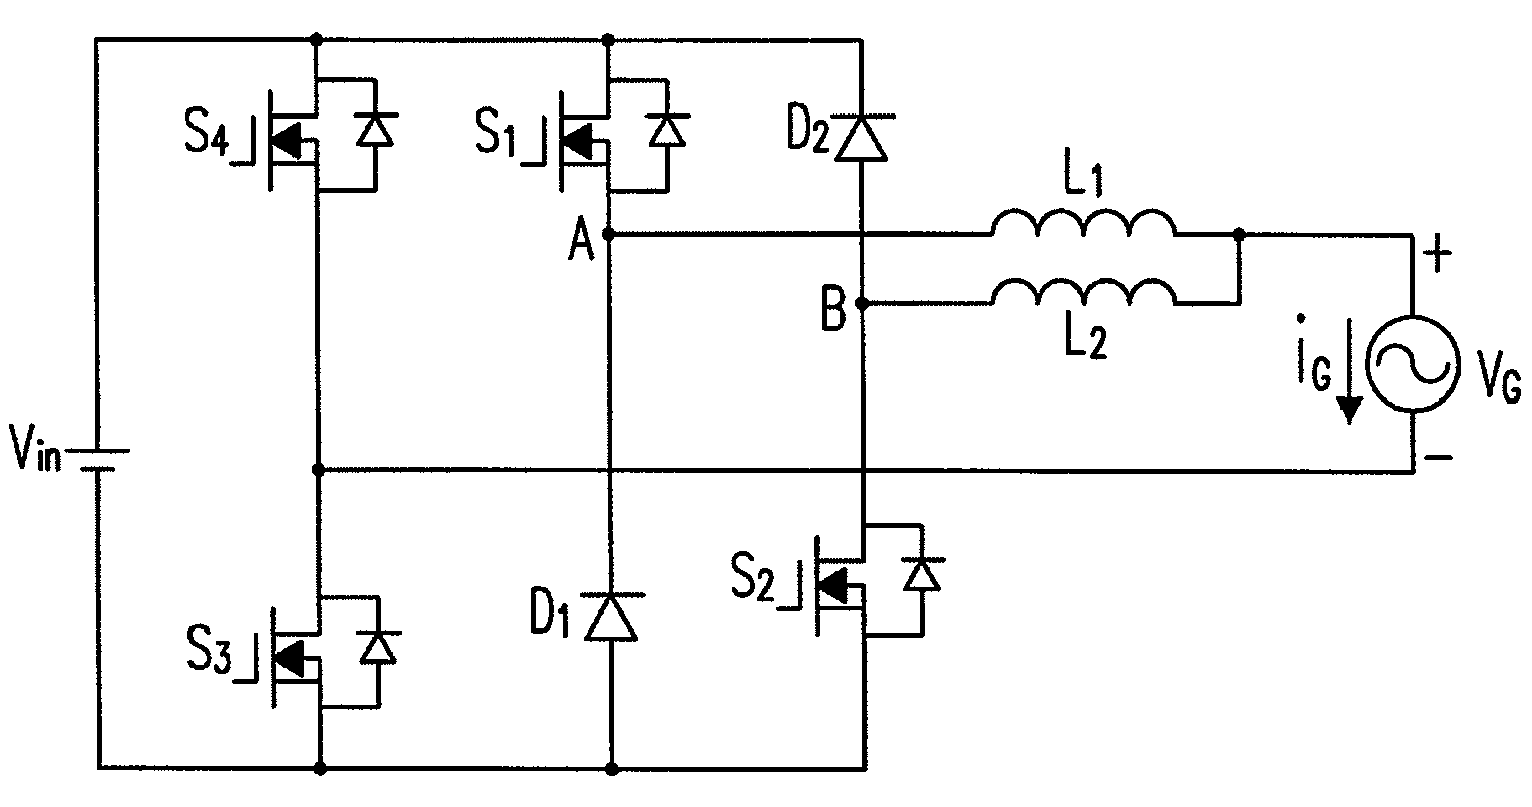 Inverter circuit having relatively higher efficiency